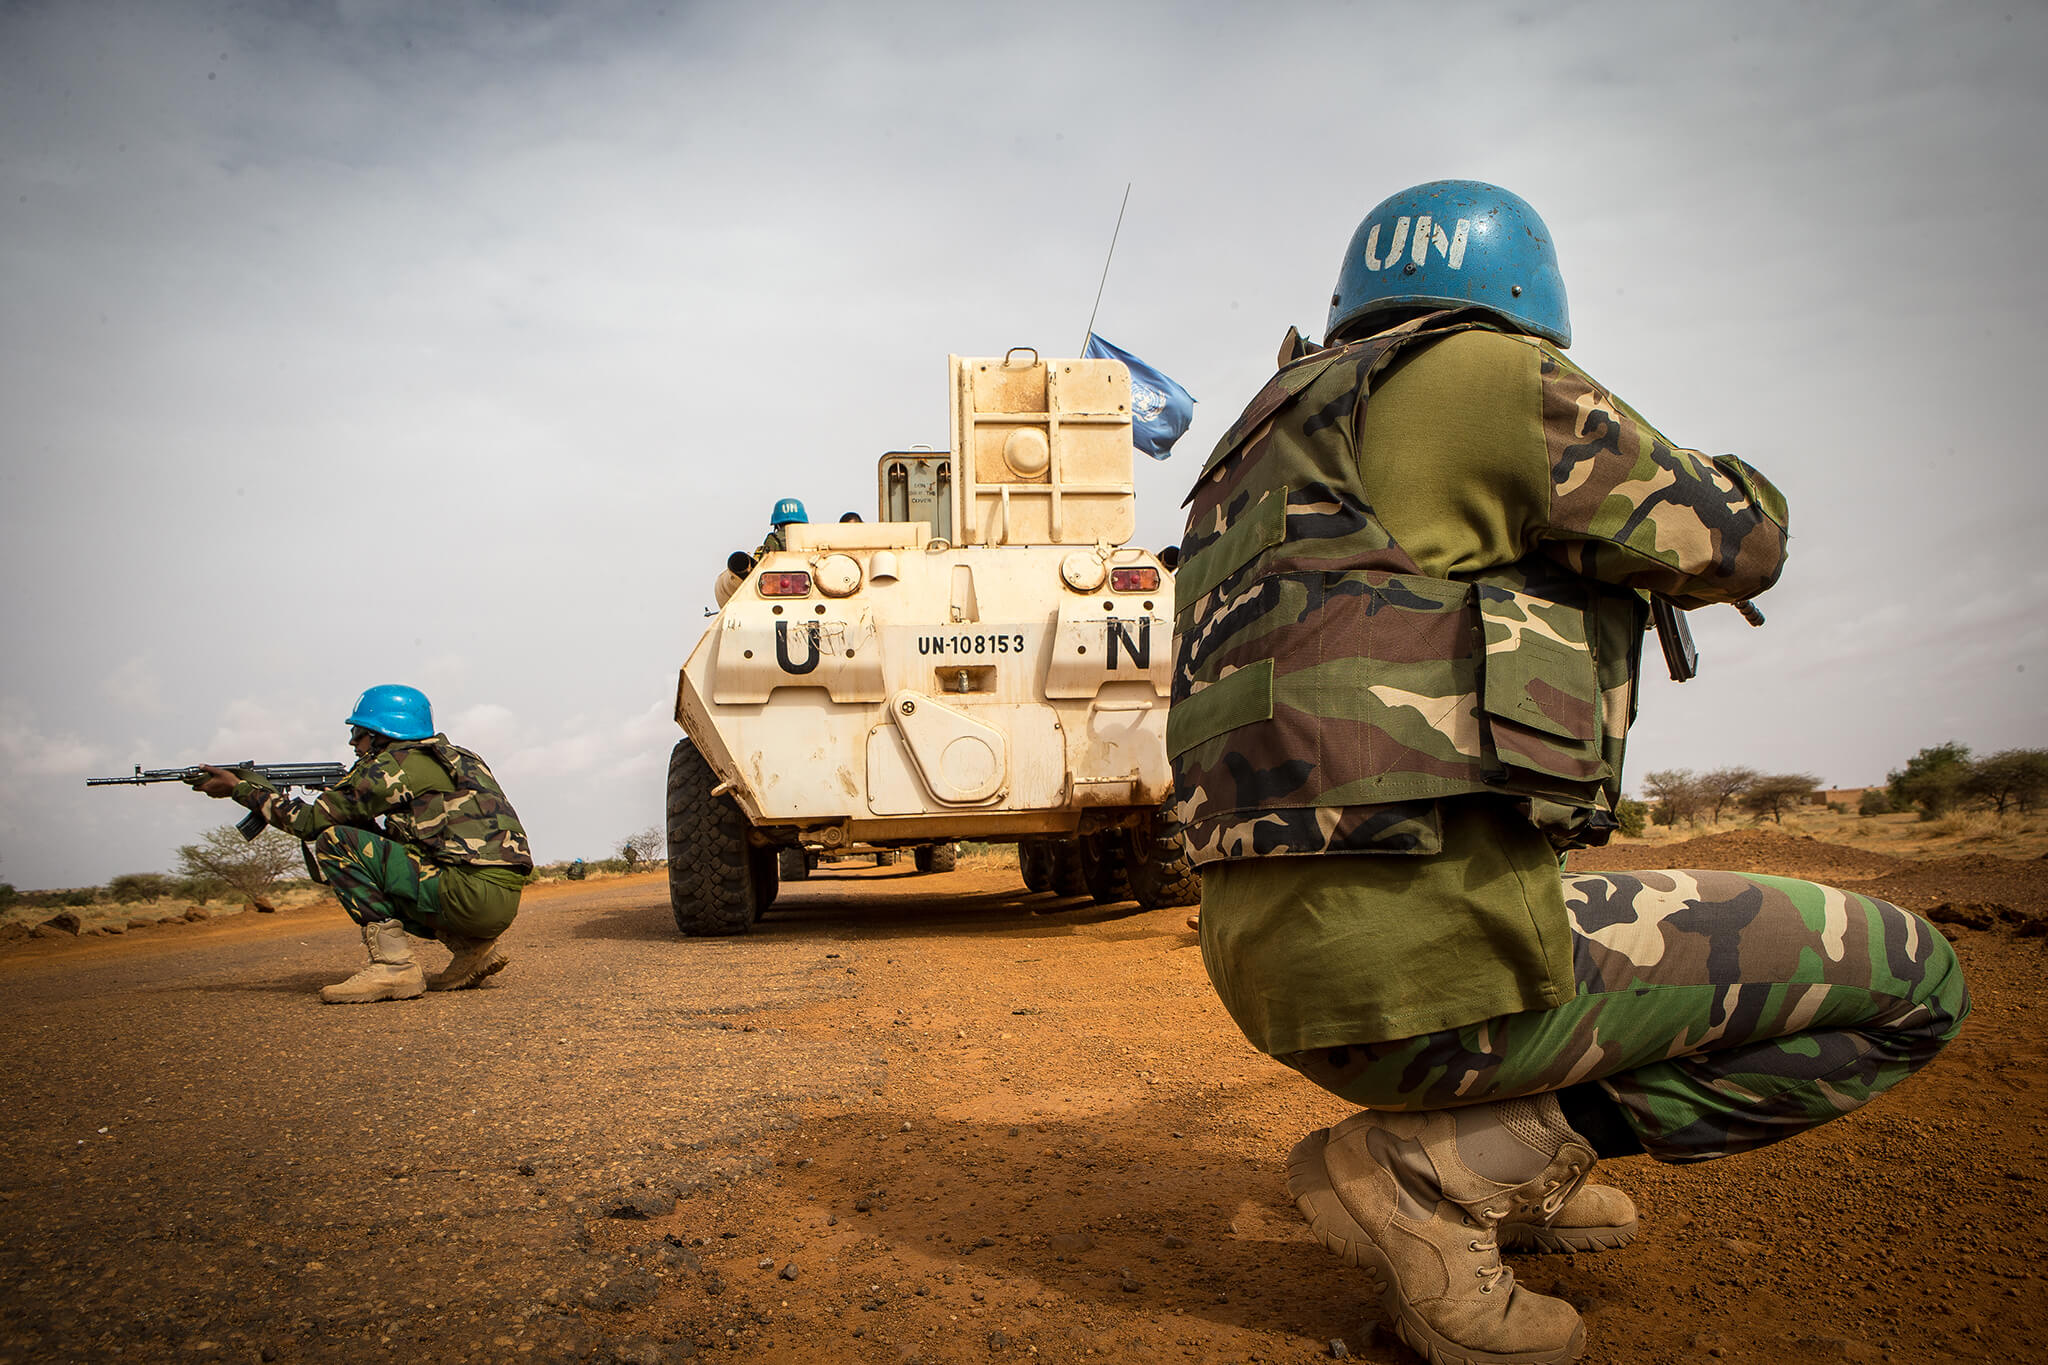 VN-militairen in 2014 op patrouille in Mali voor de VN-missie Minusma. Bron: UN Photo